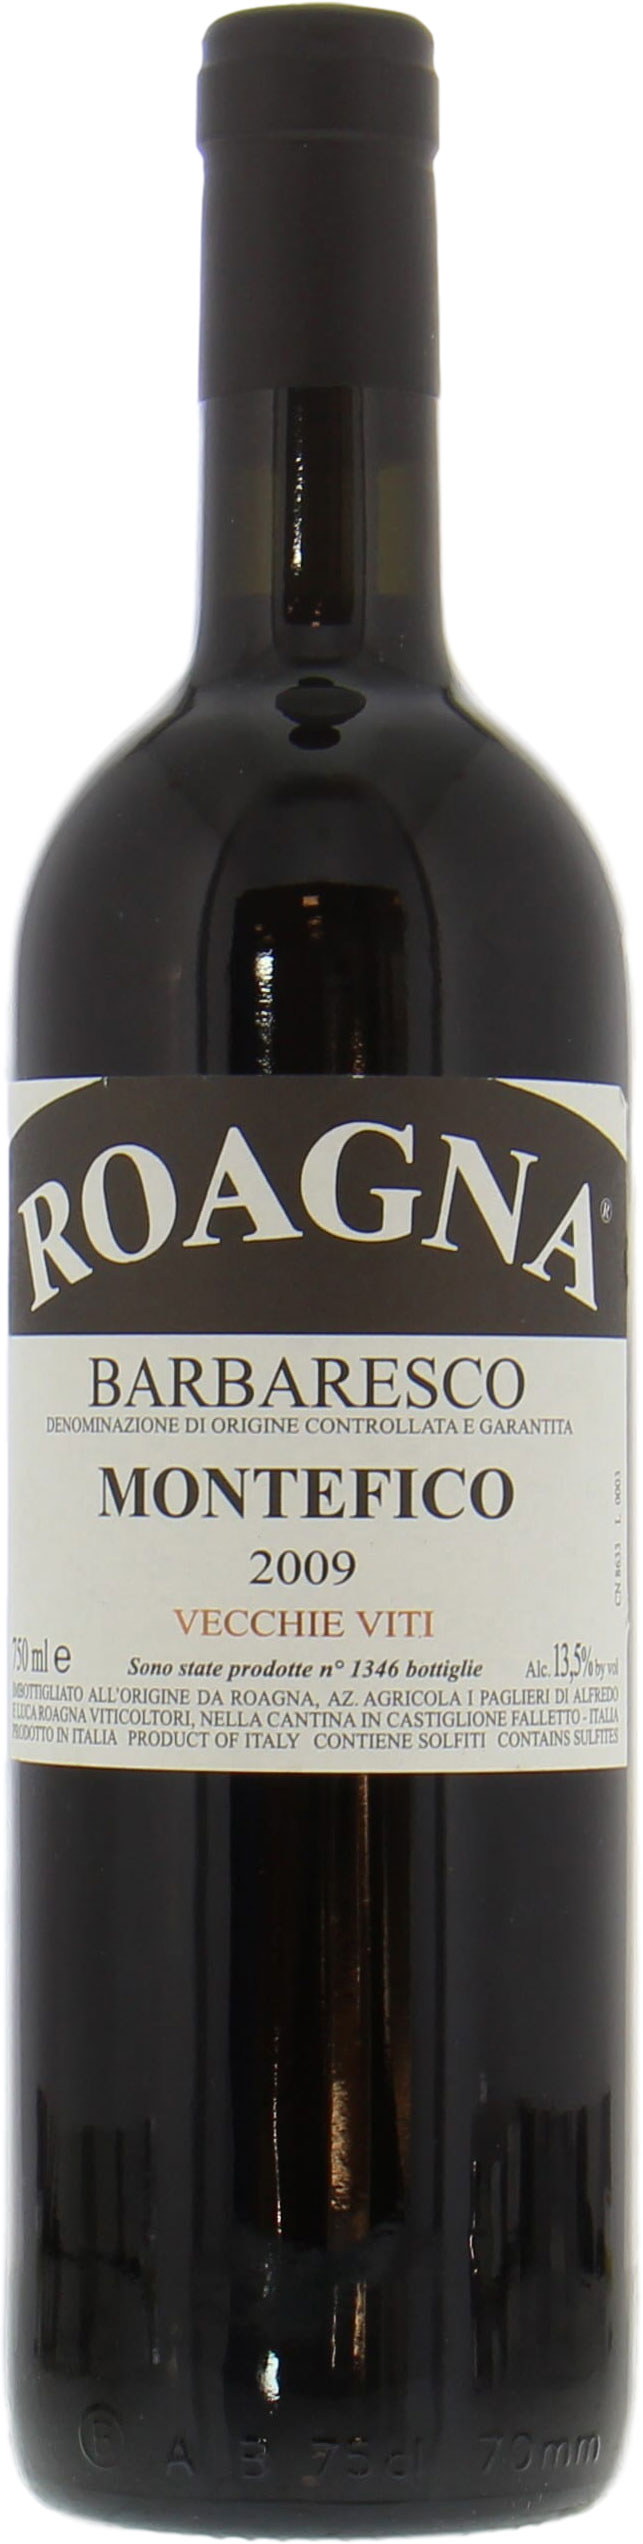 Roagna - Barbaresco Montefico 2009 Perfect